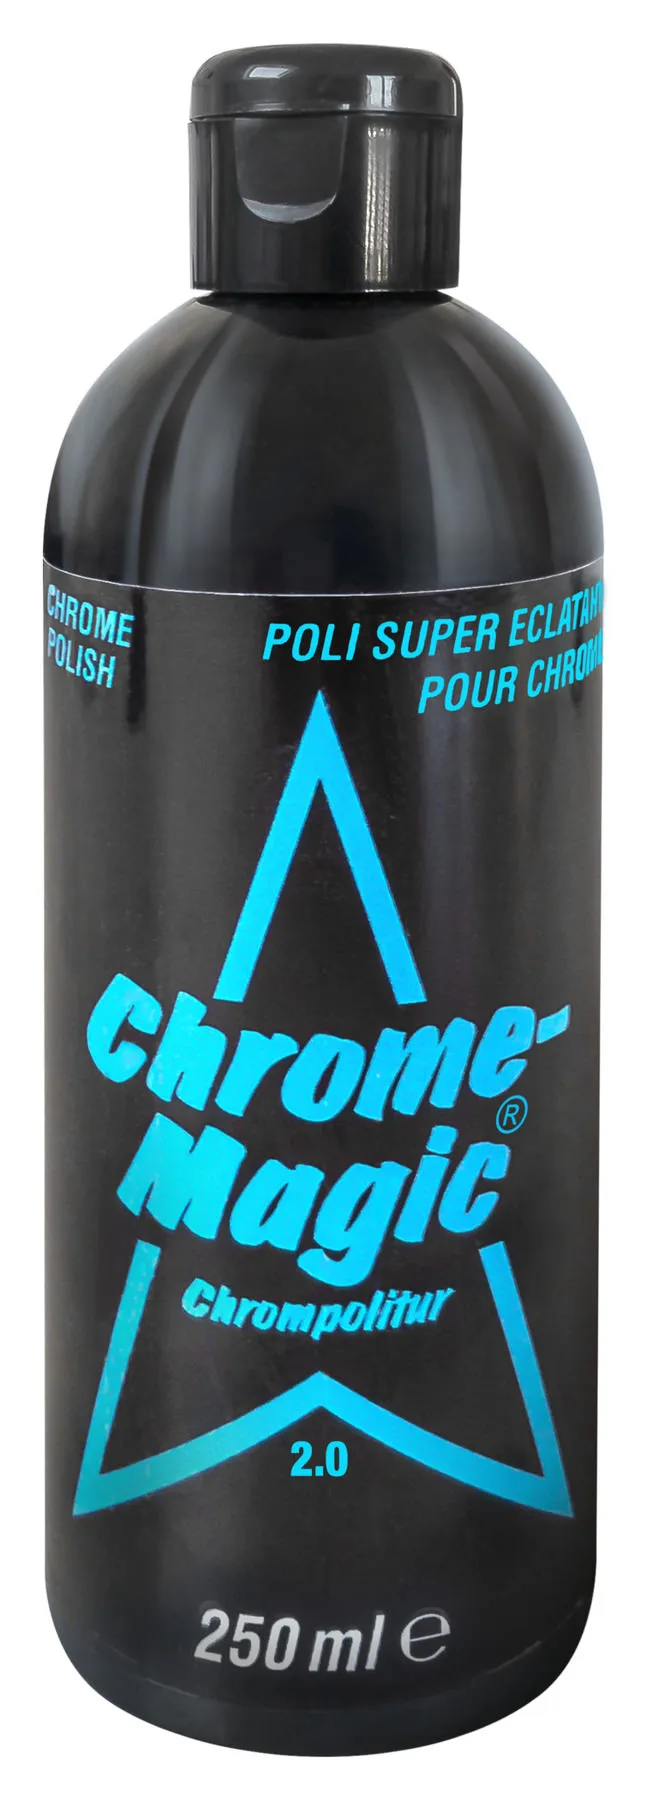 CHROME-MAGIC CHROMPOLITUR